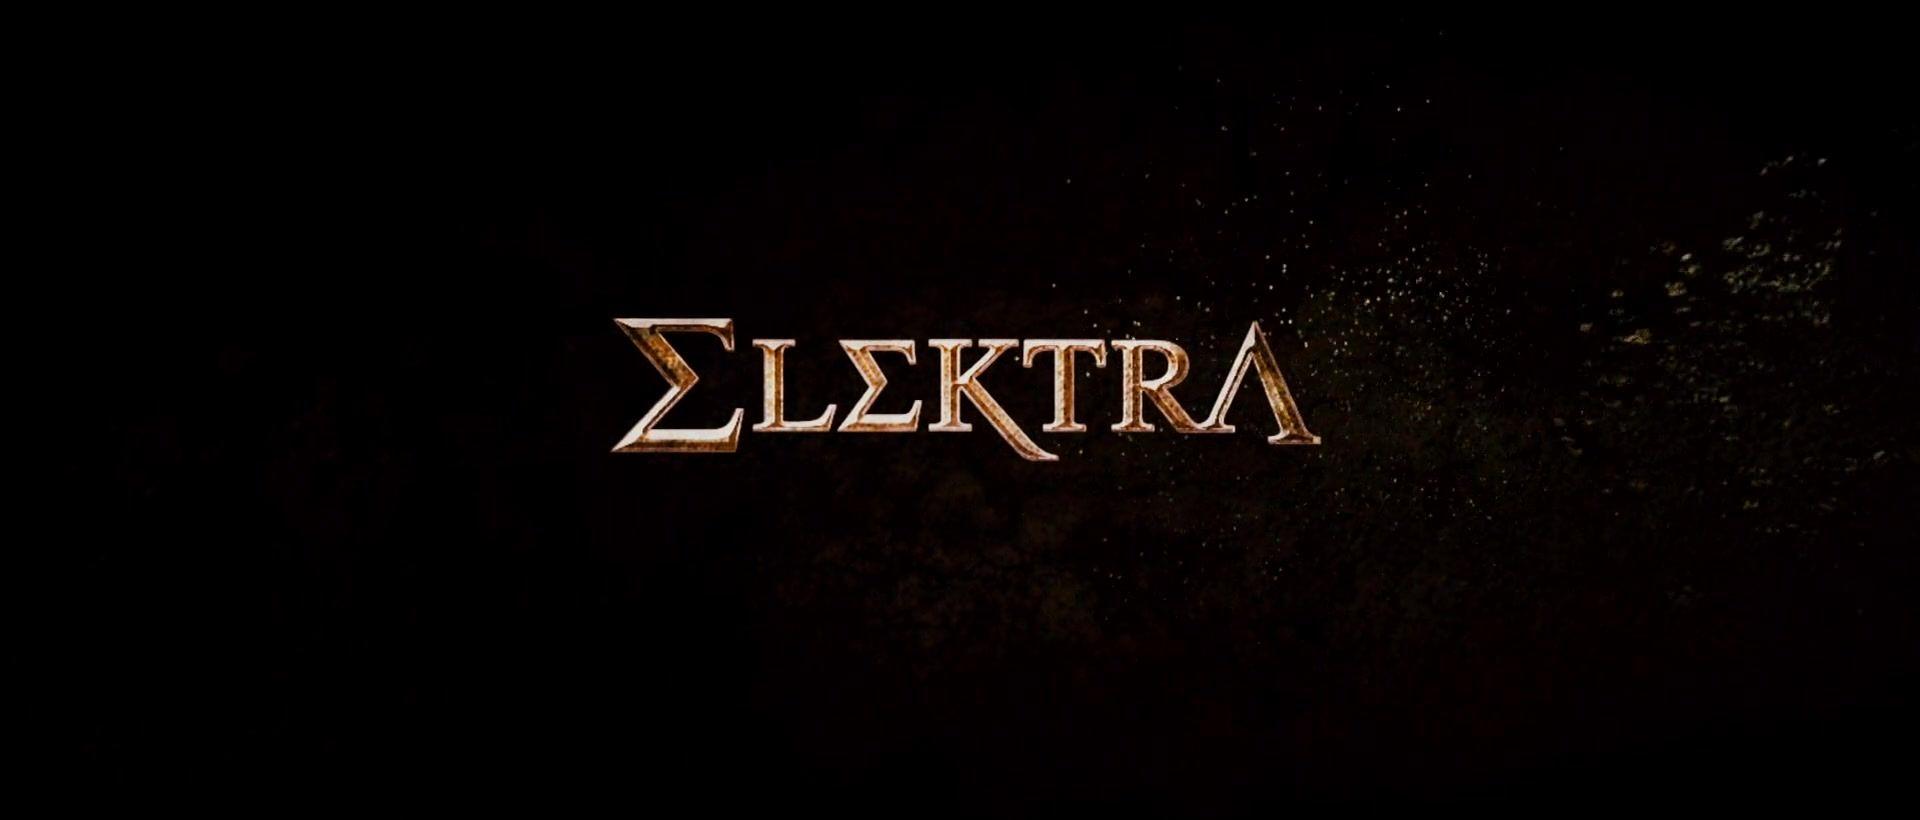 Elektra Logo - Elektra. Film and Television